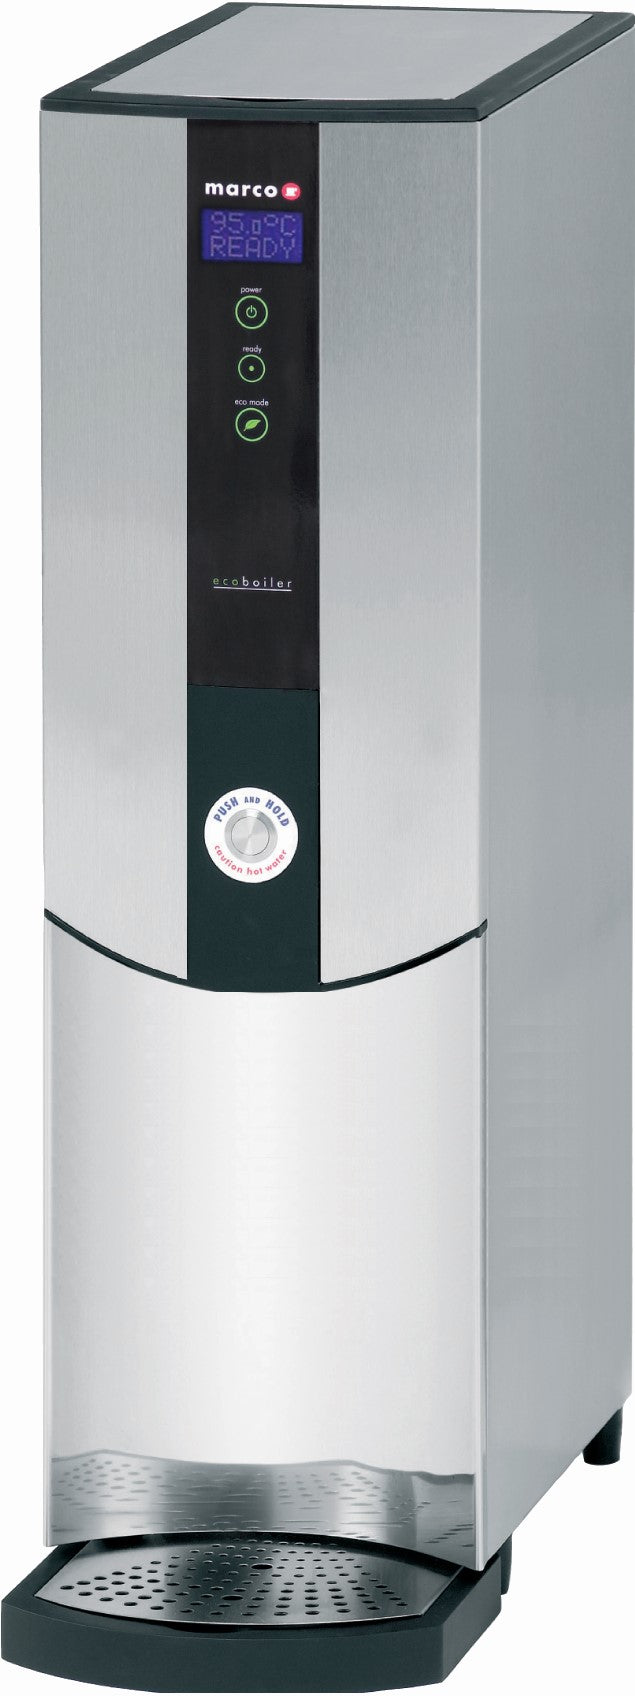 Marco EcoBoiler Push Button Dispense Hot Water Dispenser PB5/PB10 HIDECK